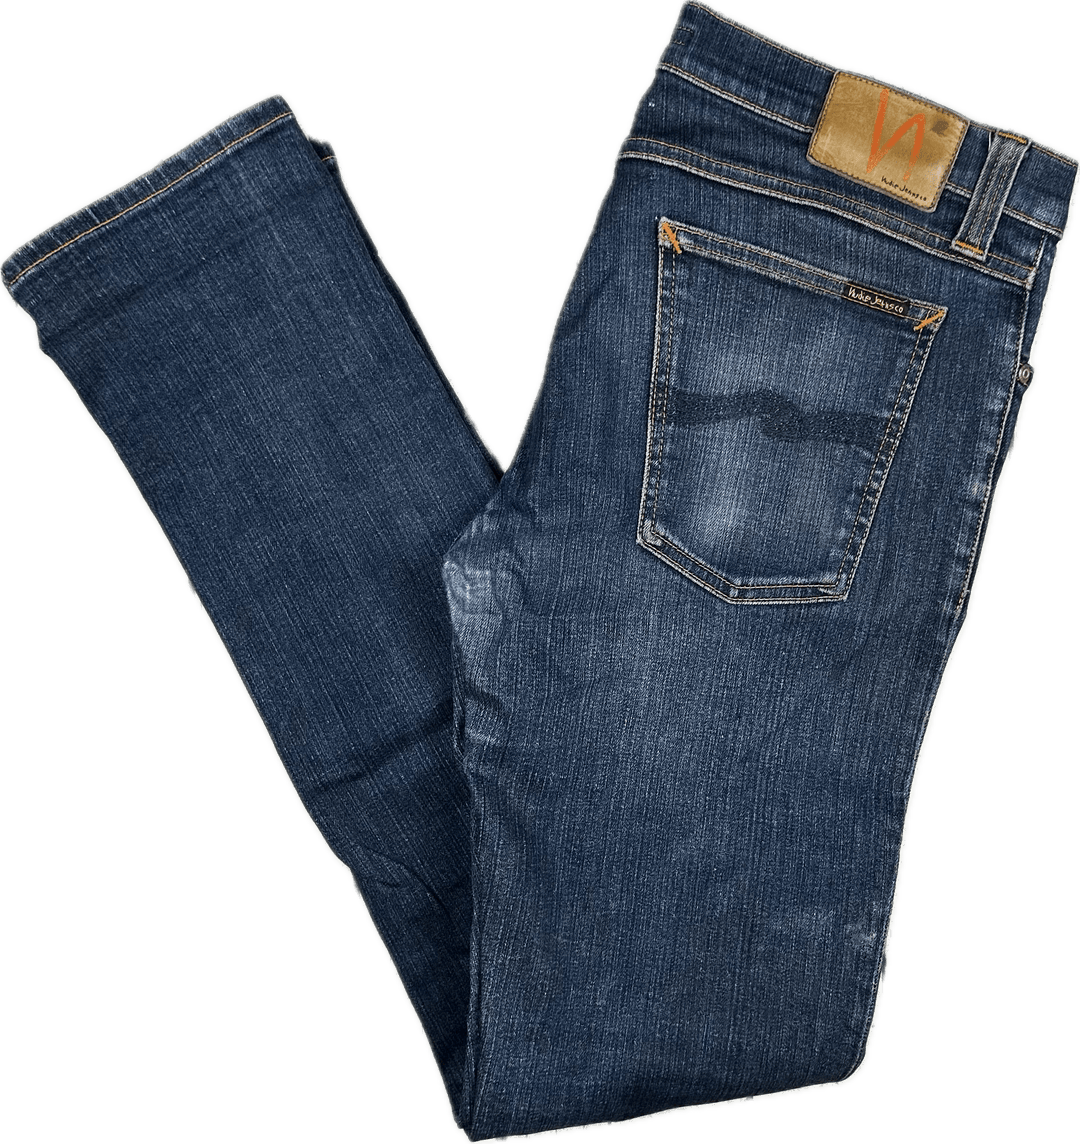 Nudie Jeans Co. 'Tube Kelly'Rinsed Strikey Jeans - Size 32/34 - Jean Pool